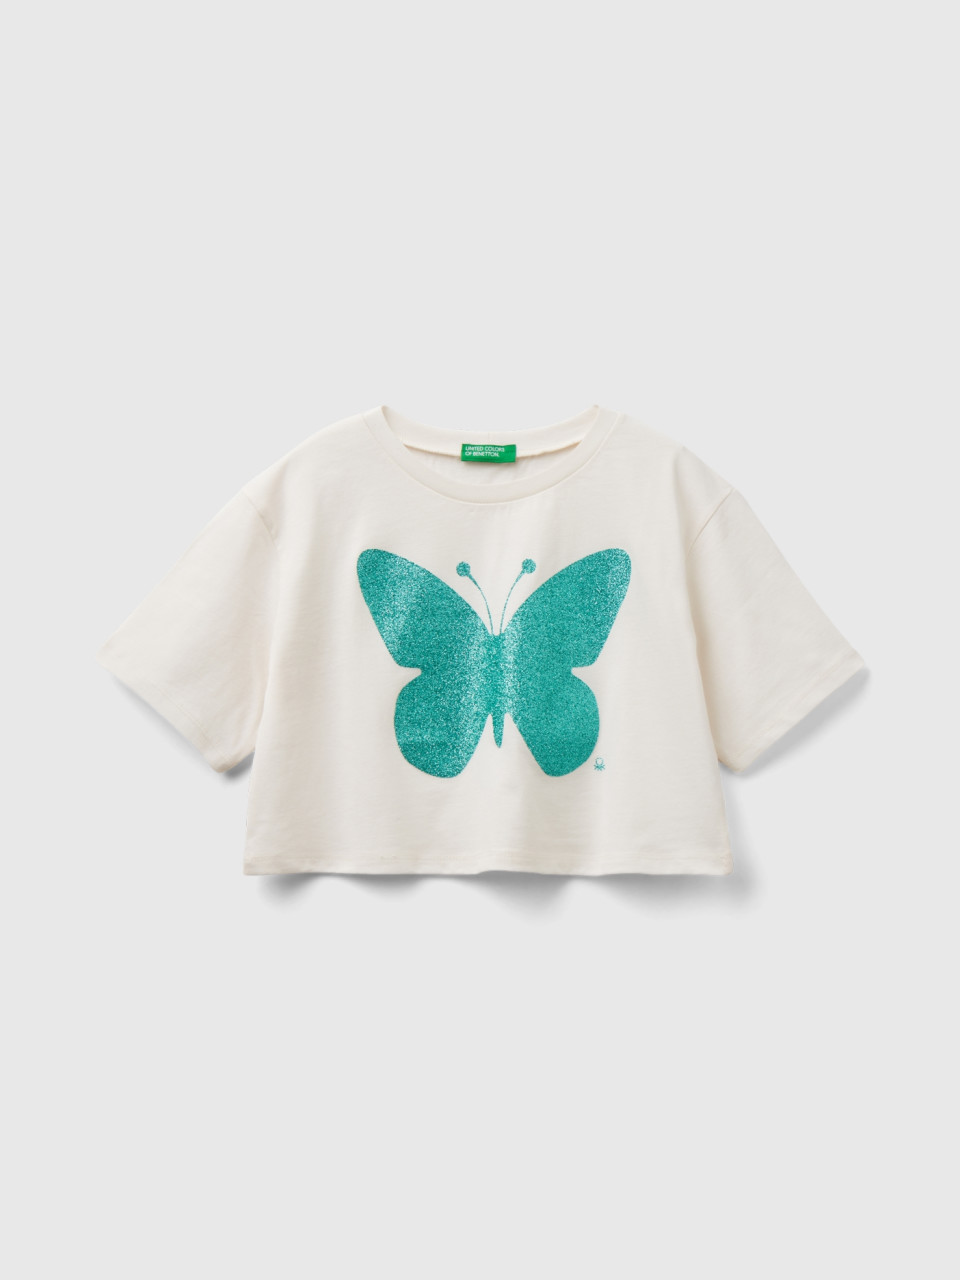 Benetton, T-shirt With Glittery Print, Creamy White, Kids